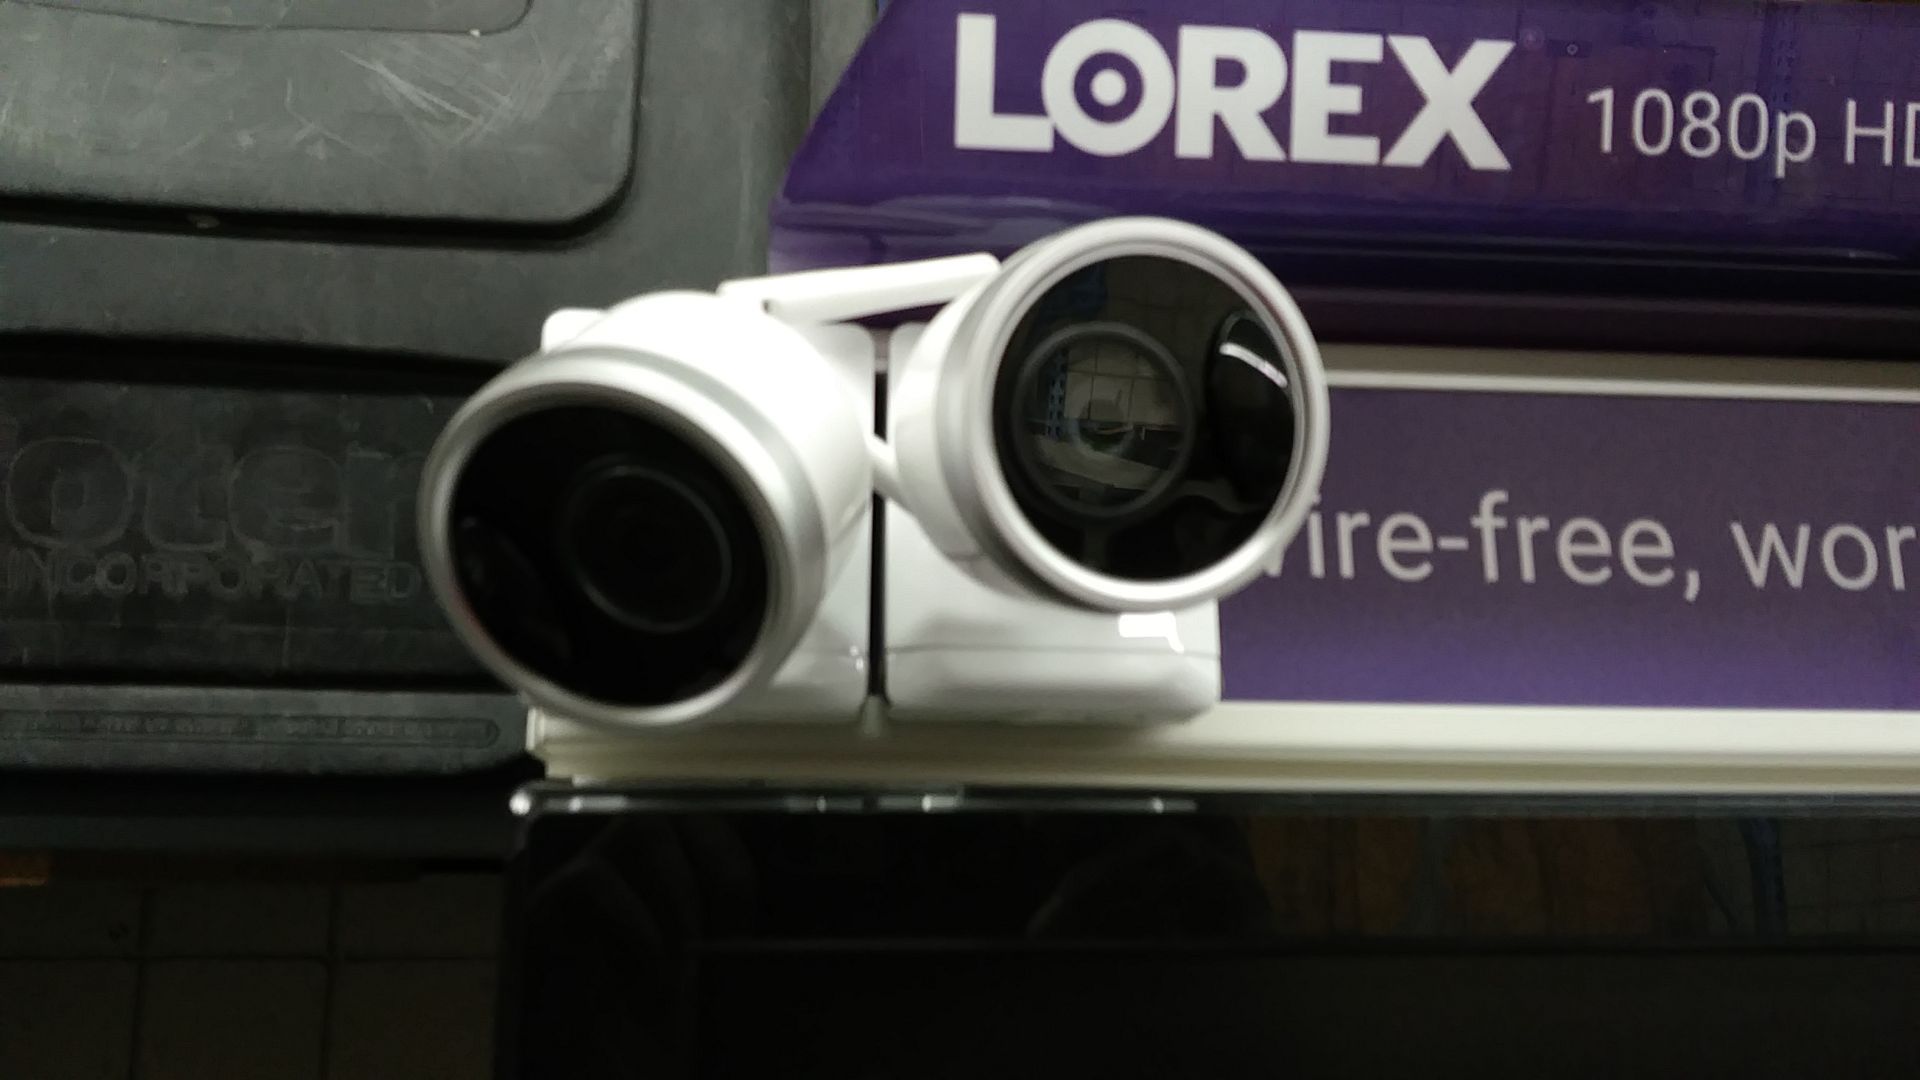 LOREX 1080P HD WIFI SECURITY CAMERA SYSTEM - Image 2 of 7